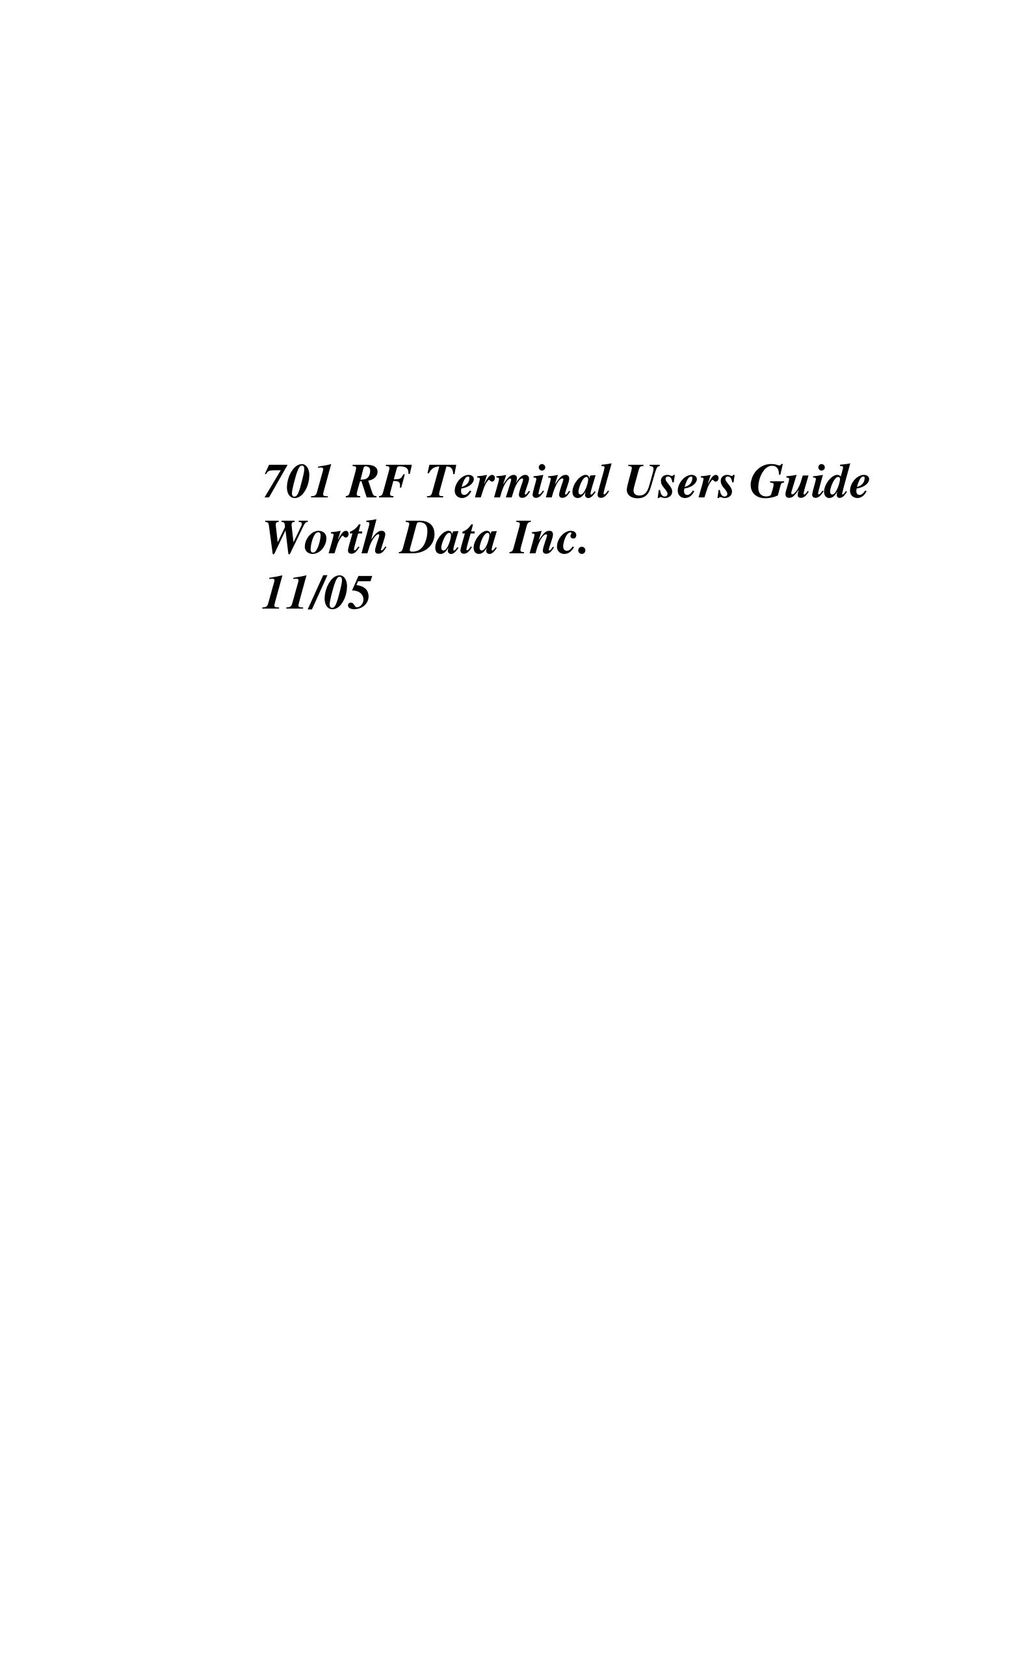 Worth Data 701 RF Barcode Reader User Manual